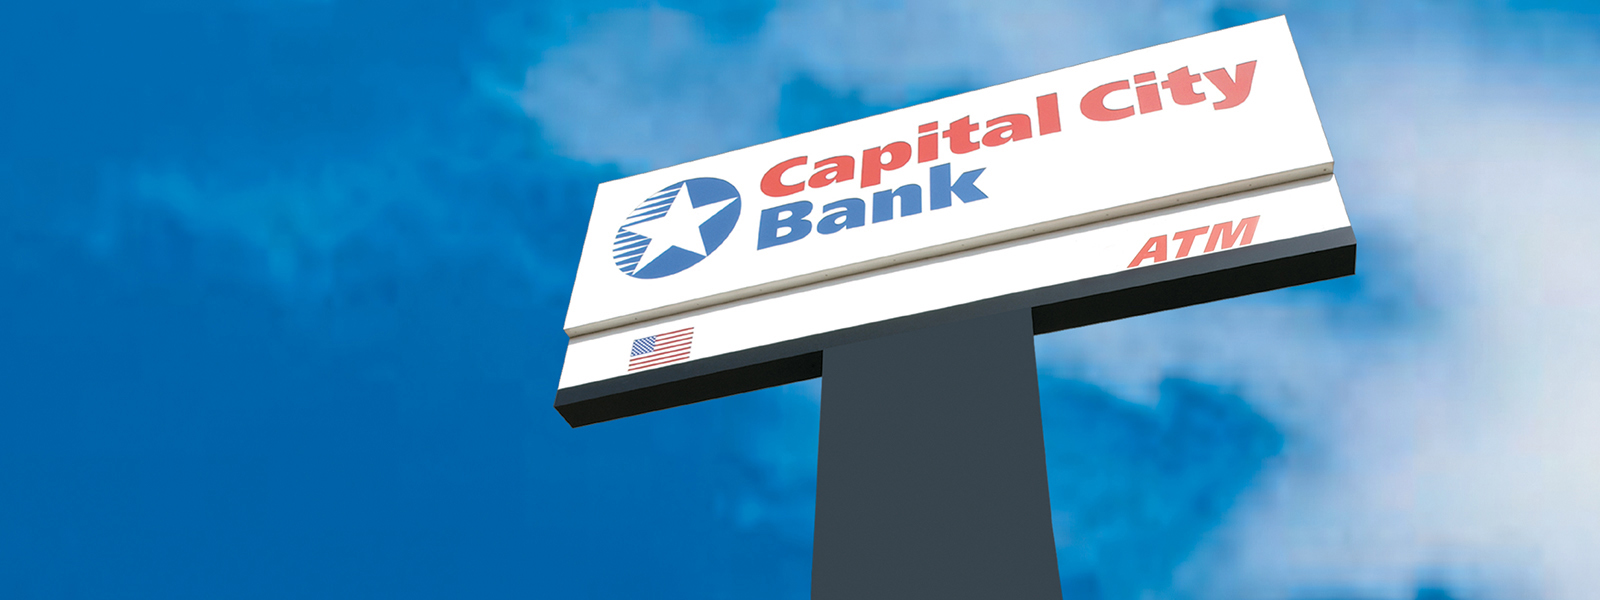 Capital City Bank: Banking in Florida, Georgia and Alabama